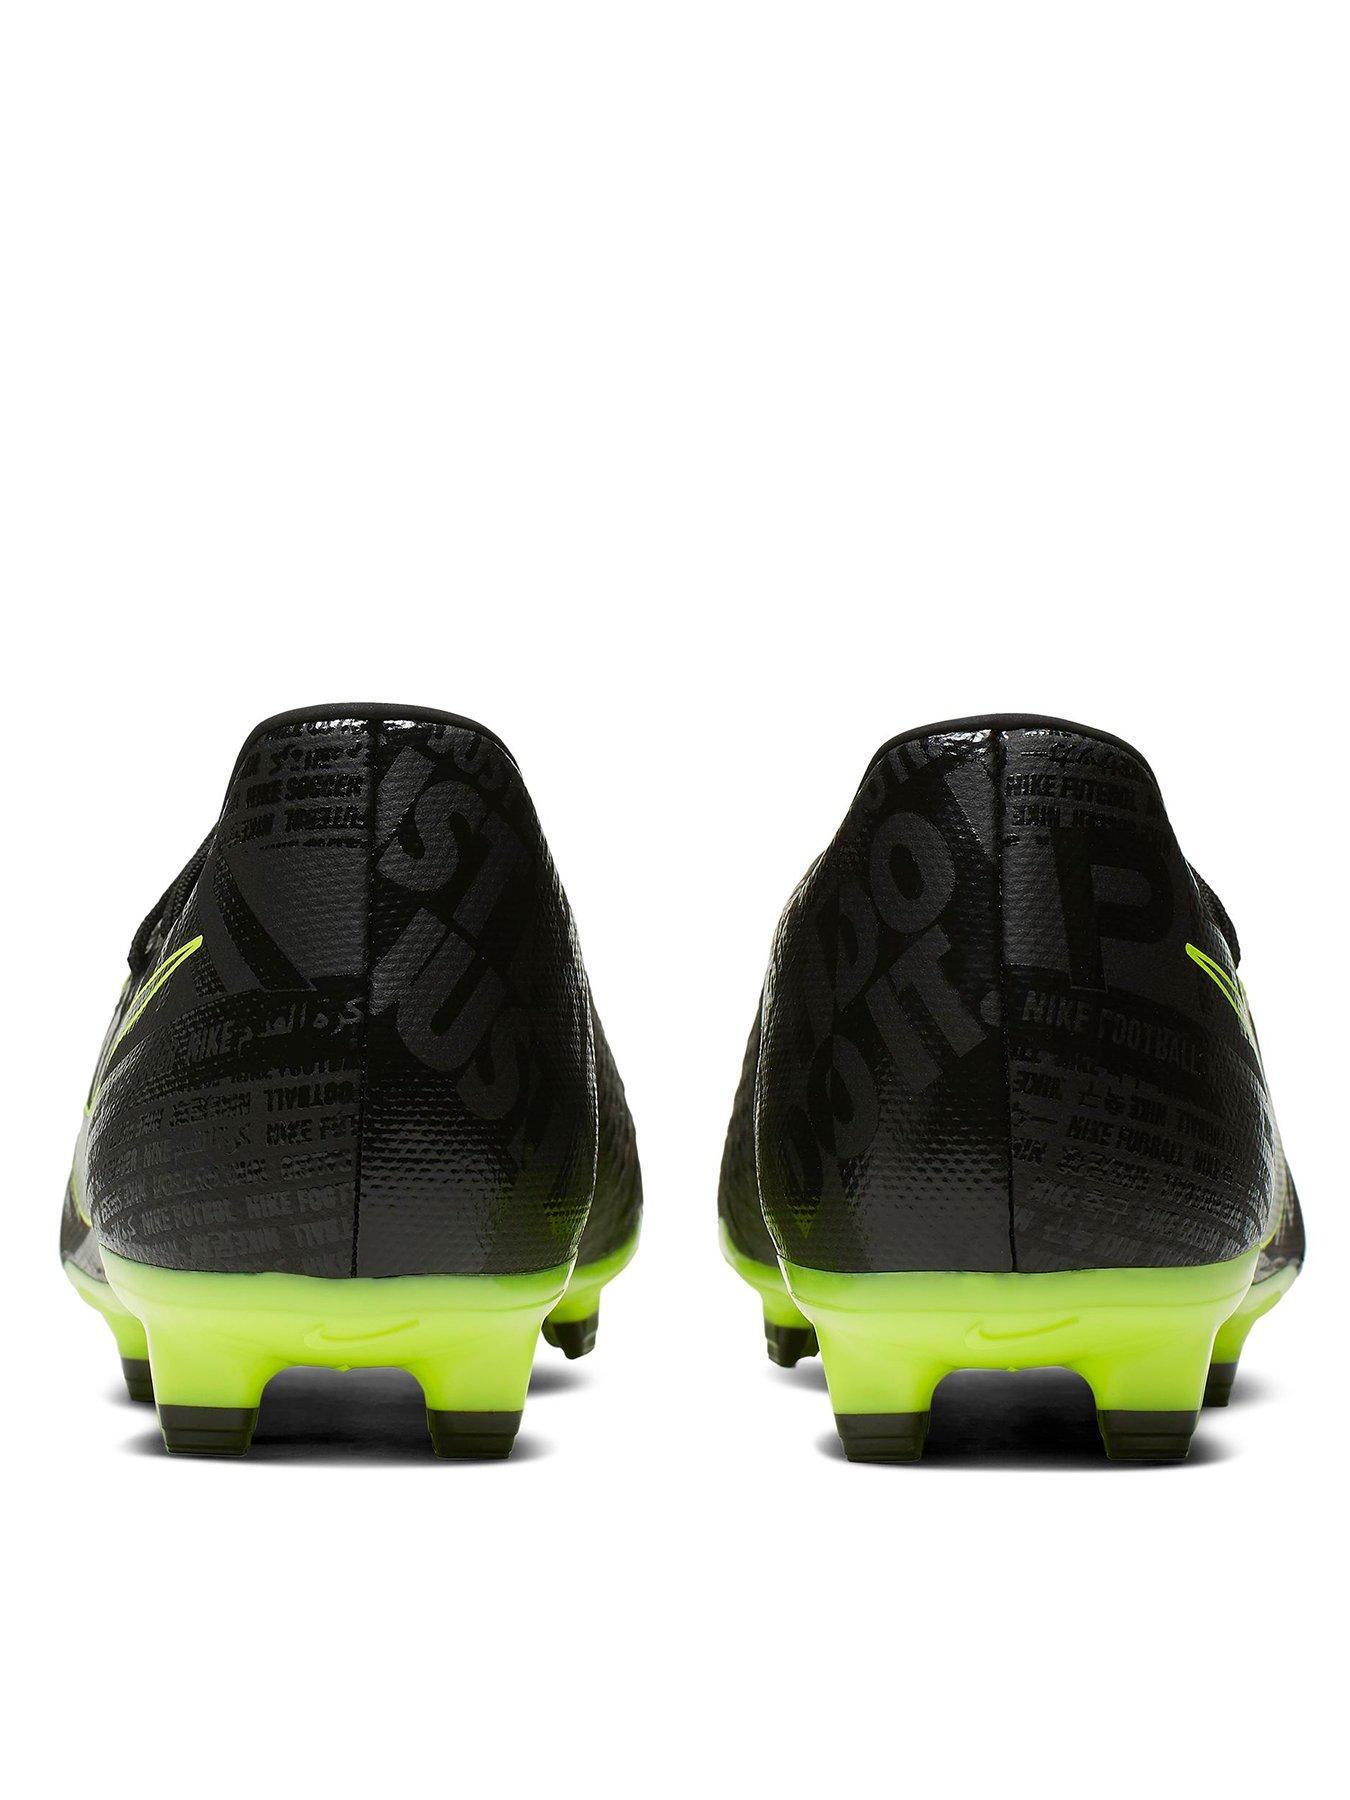 Nike Phantom Venom Academy TF Soccer Shoes Black Gold